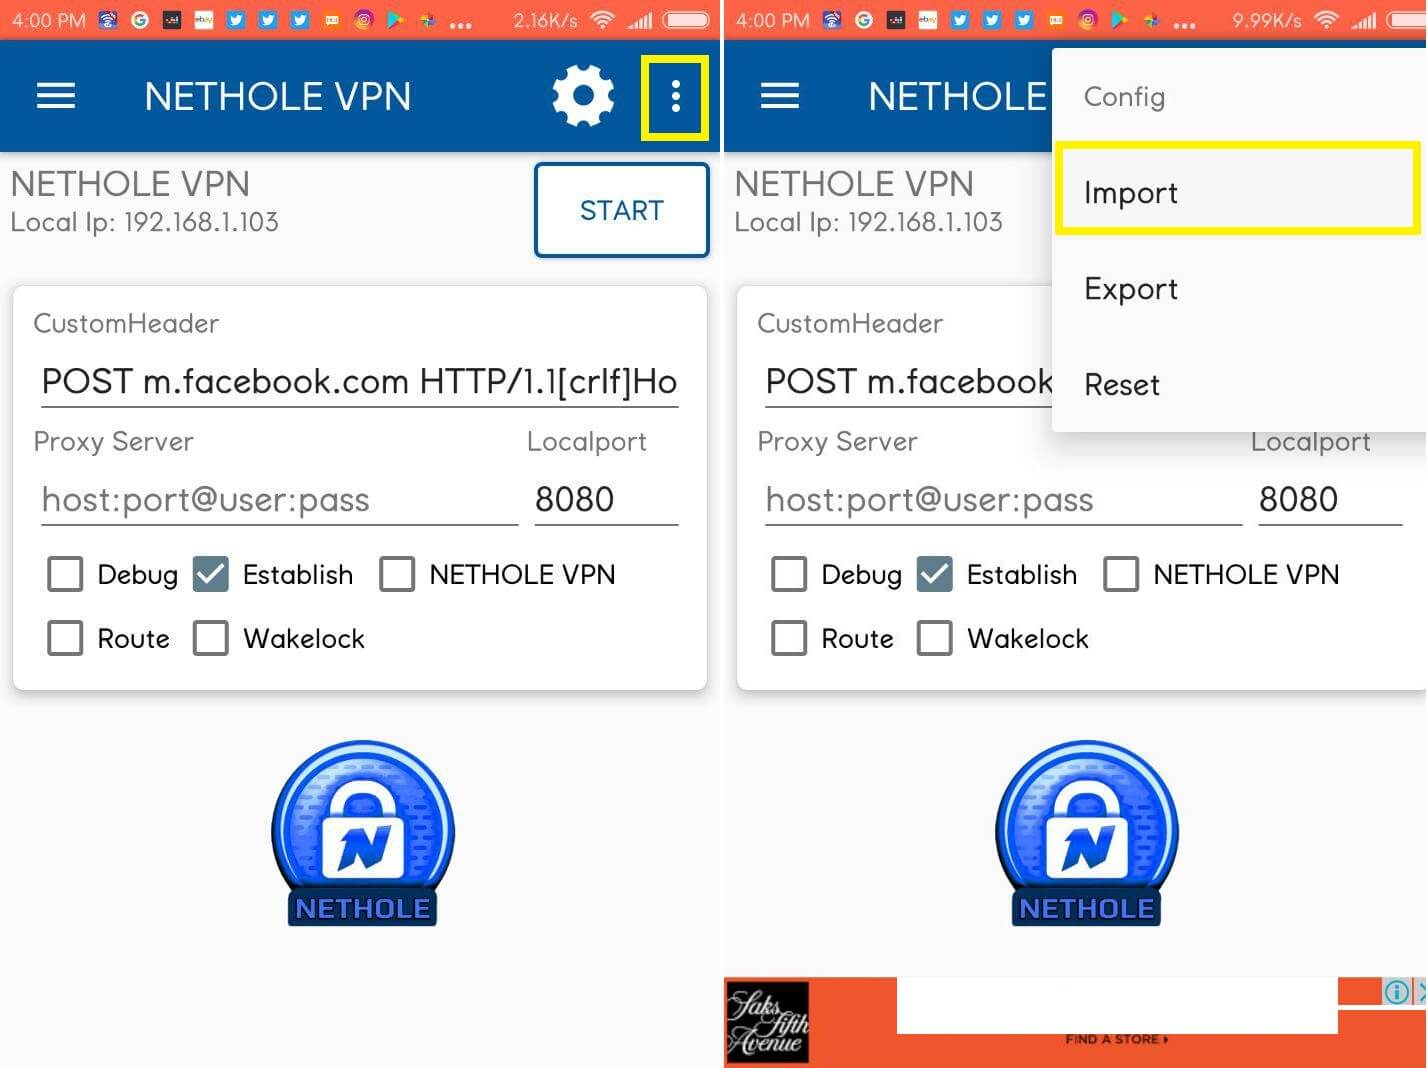 configuracion para nethole vpn en android gratis full